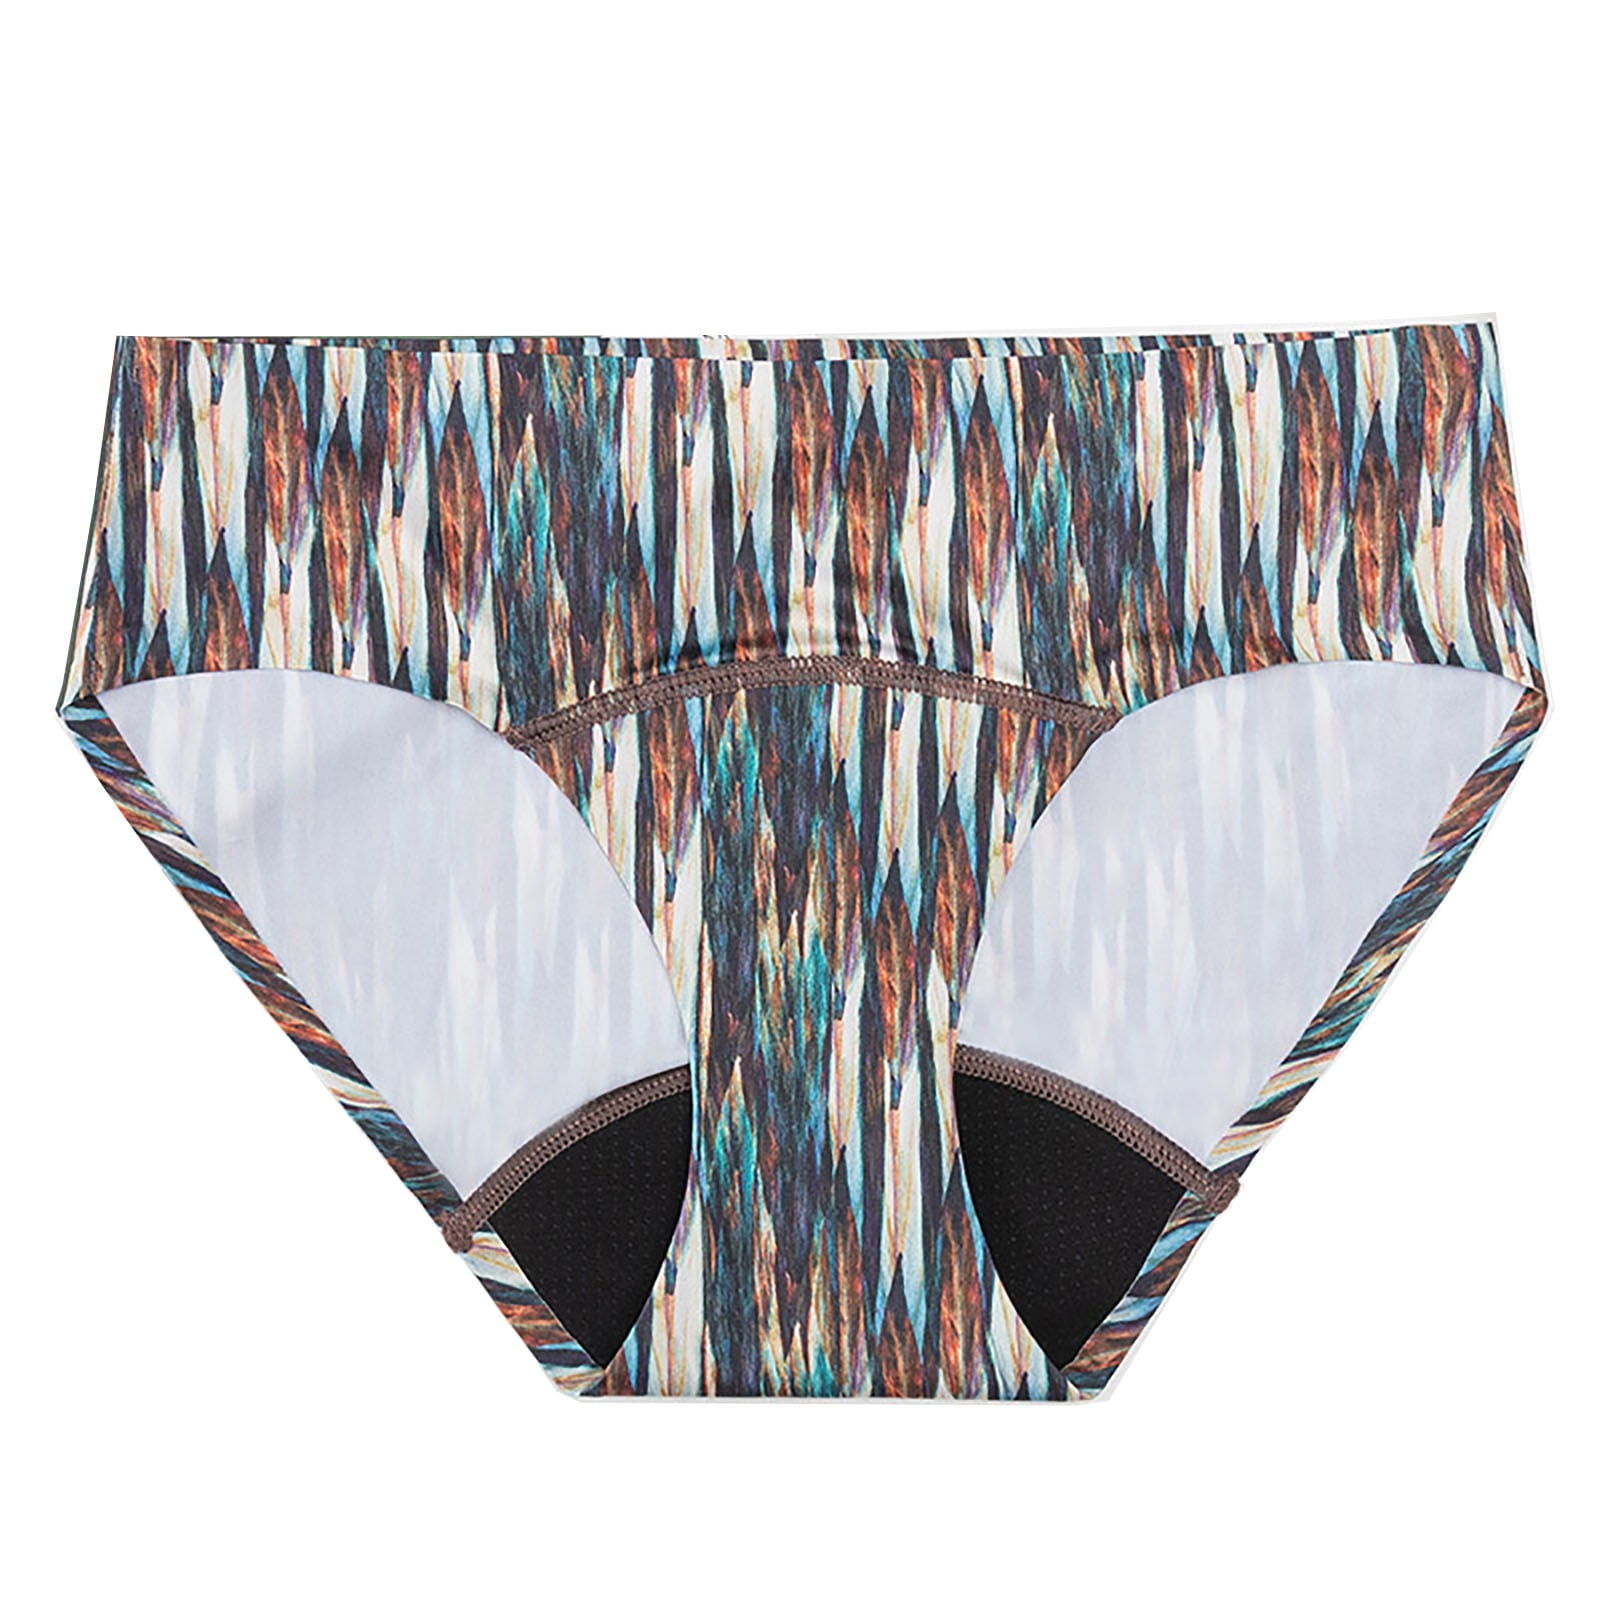 Period Swimwear Menstrual Leakproof Bikini Bottom Absorbent Pants High  Waist Swimming Trunks for Teenagers Women,Khaki XXXXL 